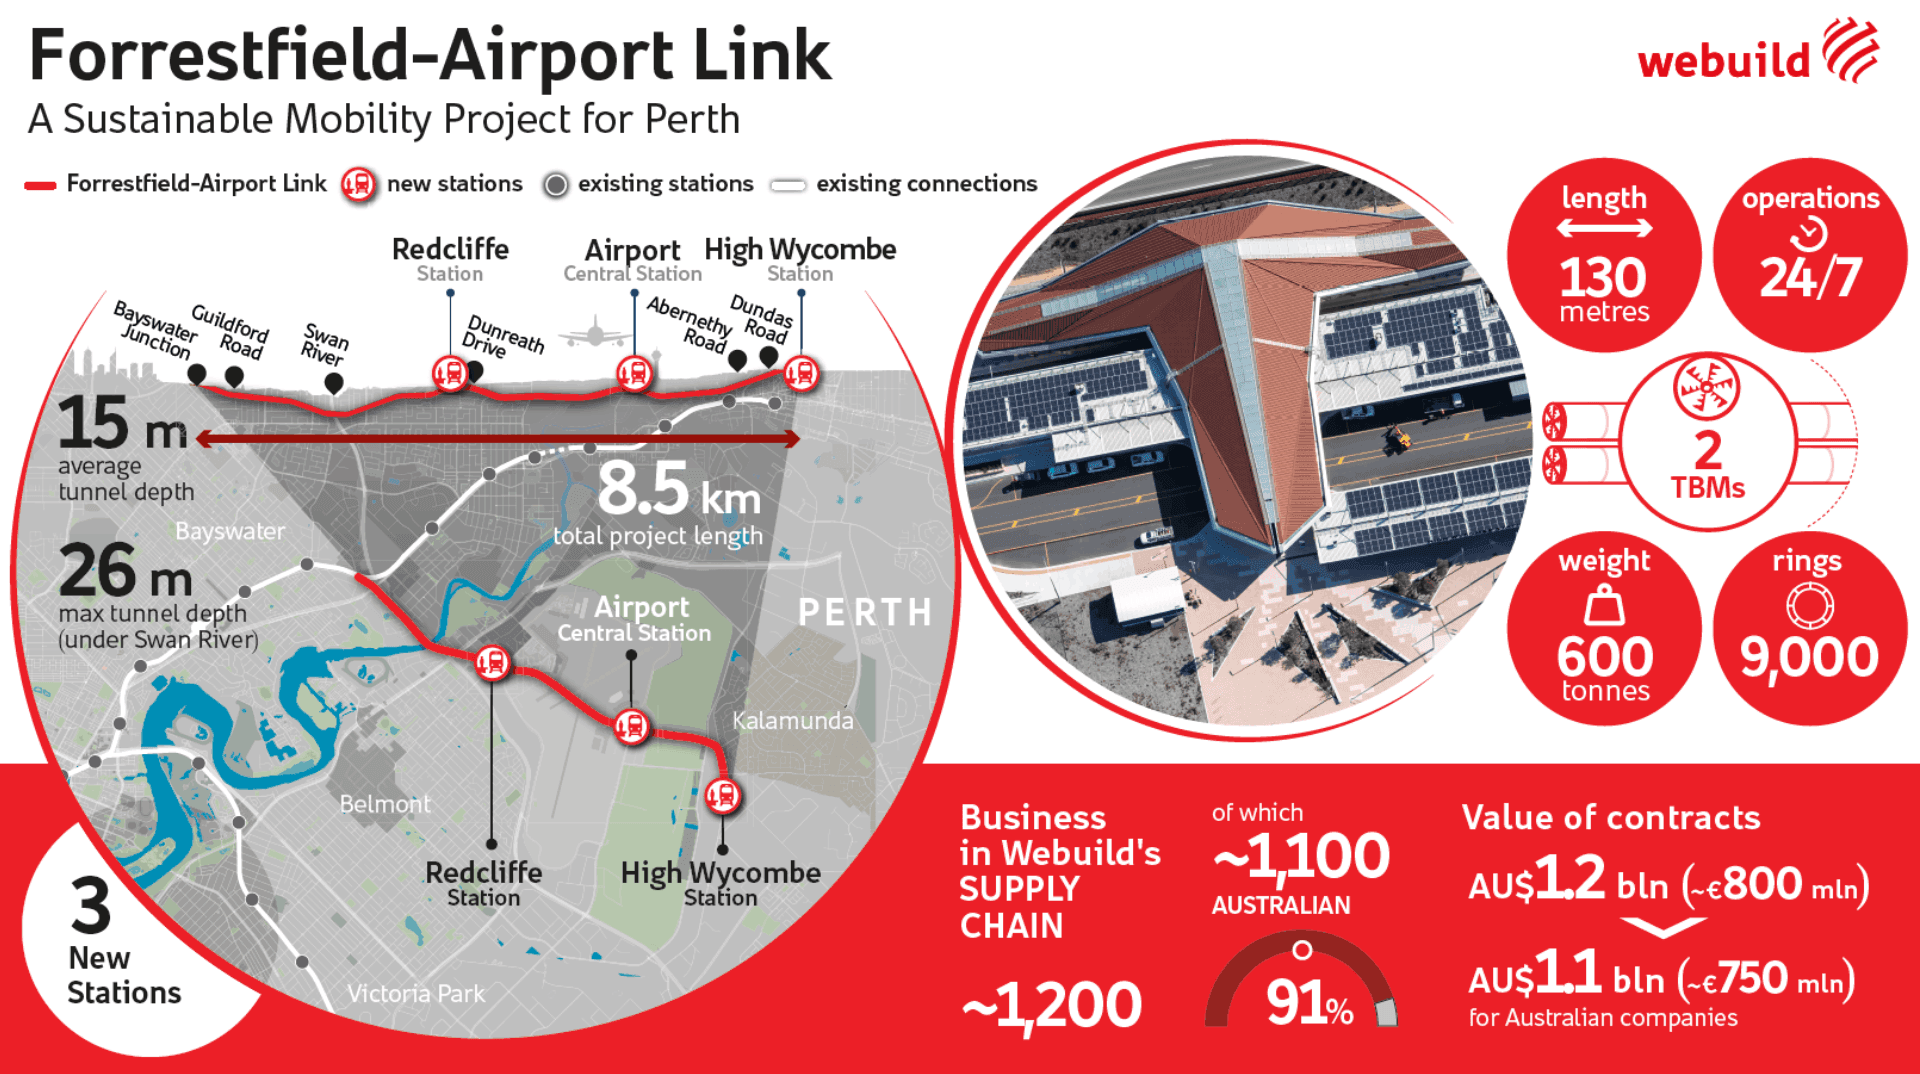 Forrestfield-Airport Link Info-Graphic